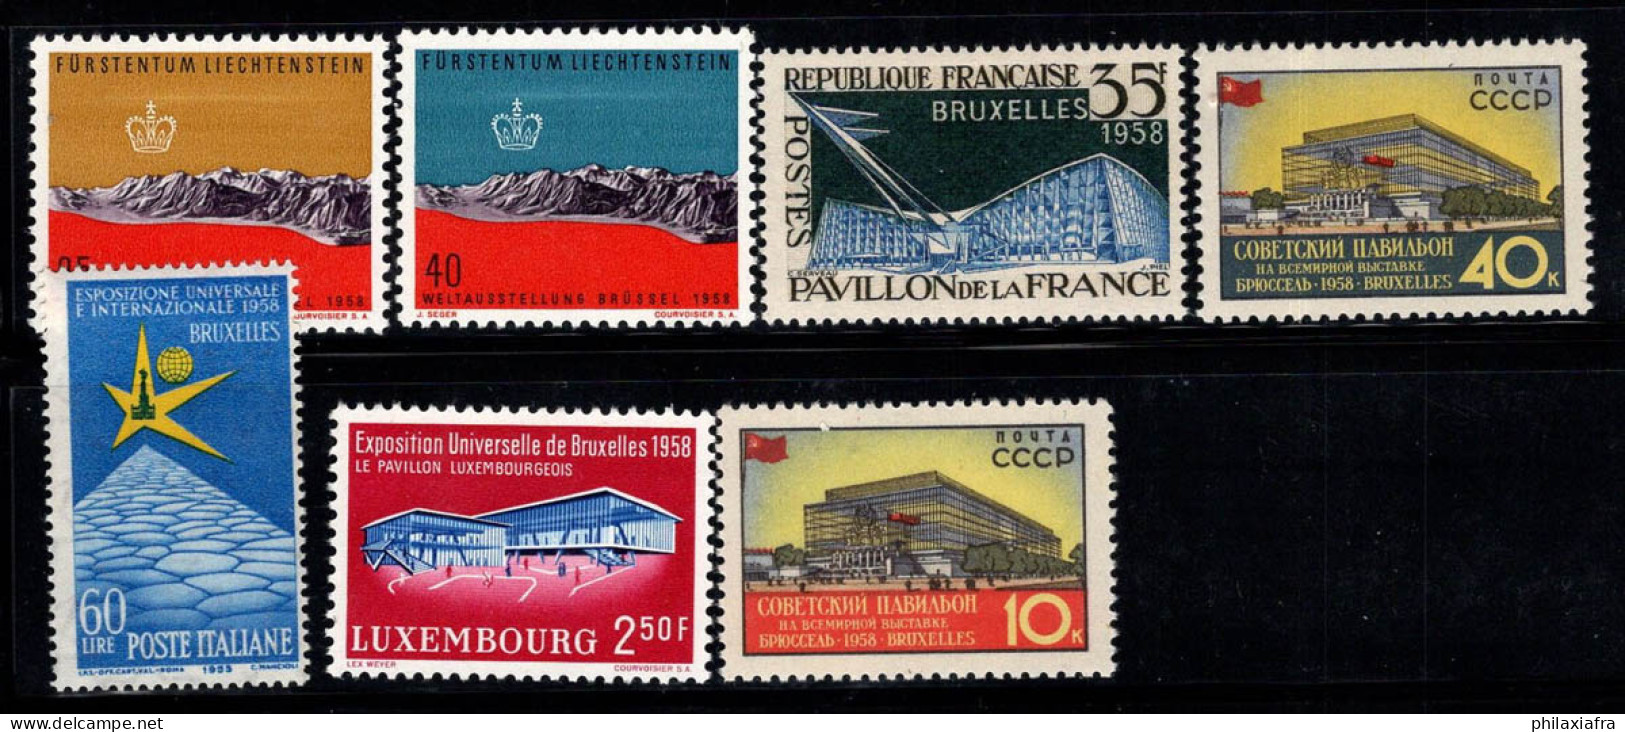 Expositions Universelles Bruxelles 1958 Neuf ** 100% France, Luxembourg, Italie - 1958 – Brüssel (Belgien)